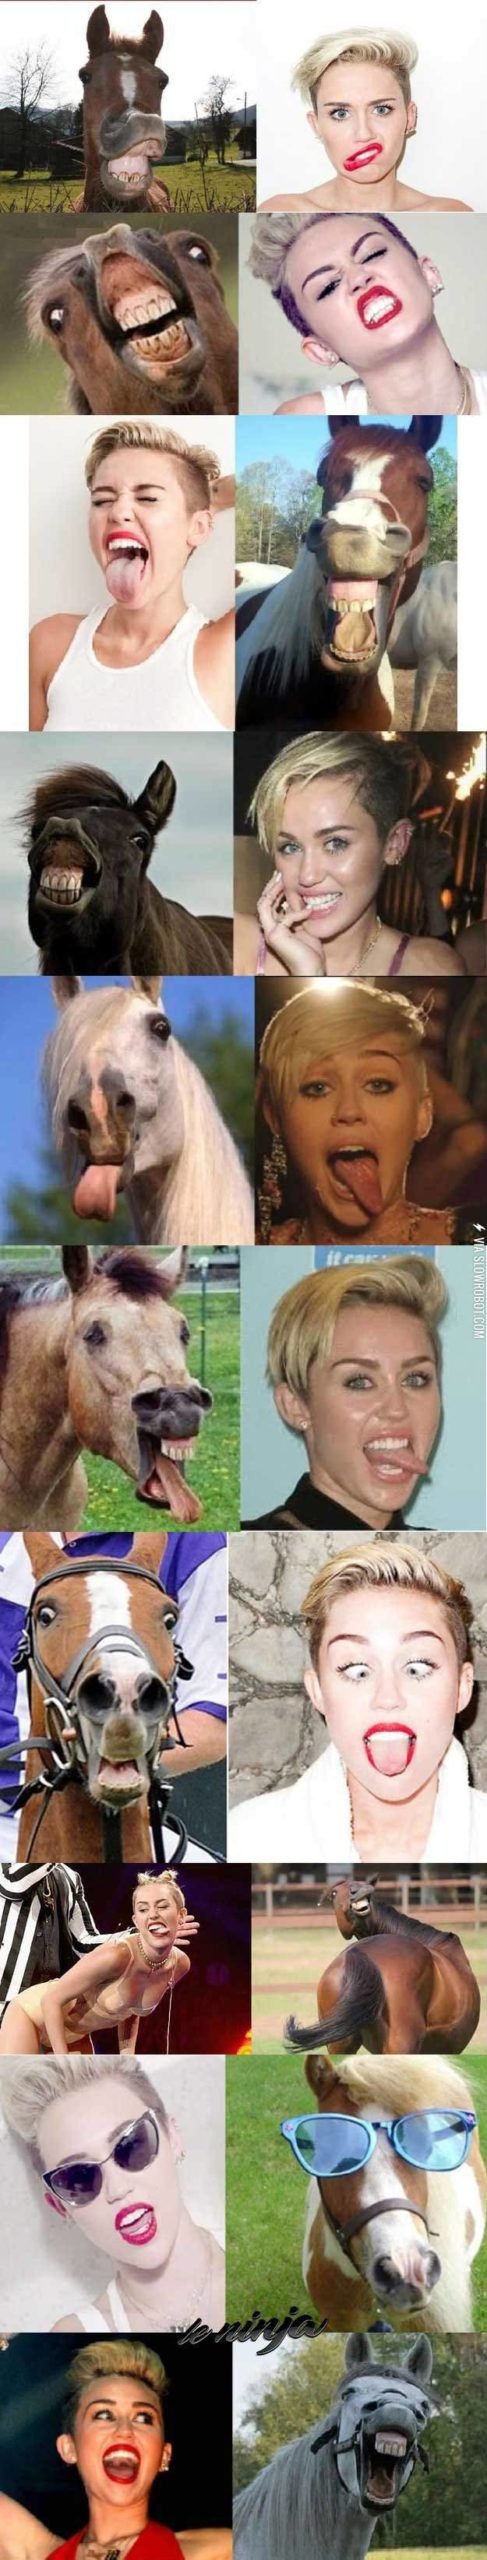 Horses+that+look+like+Miley+Cyrus.